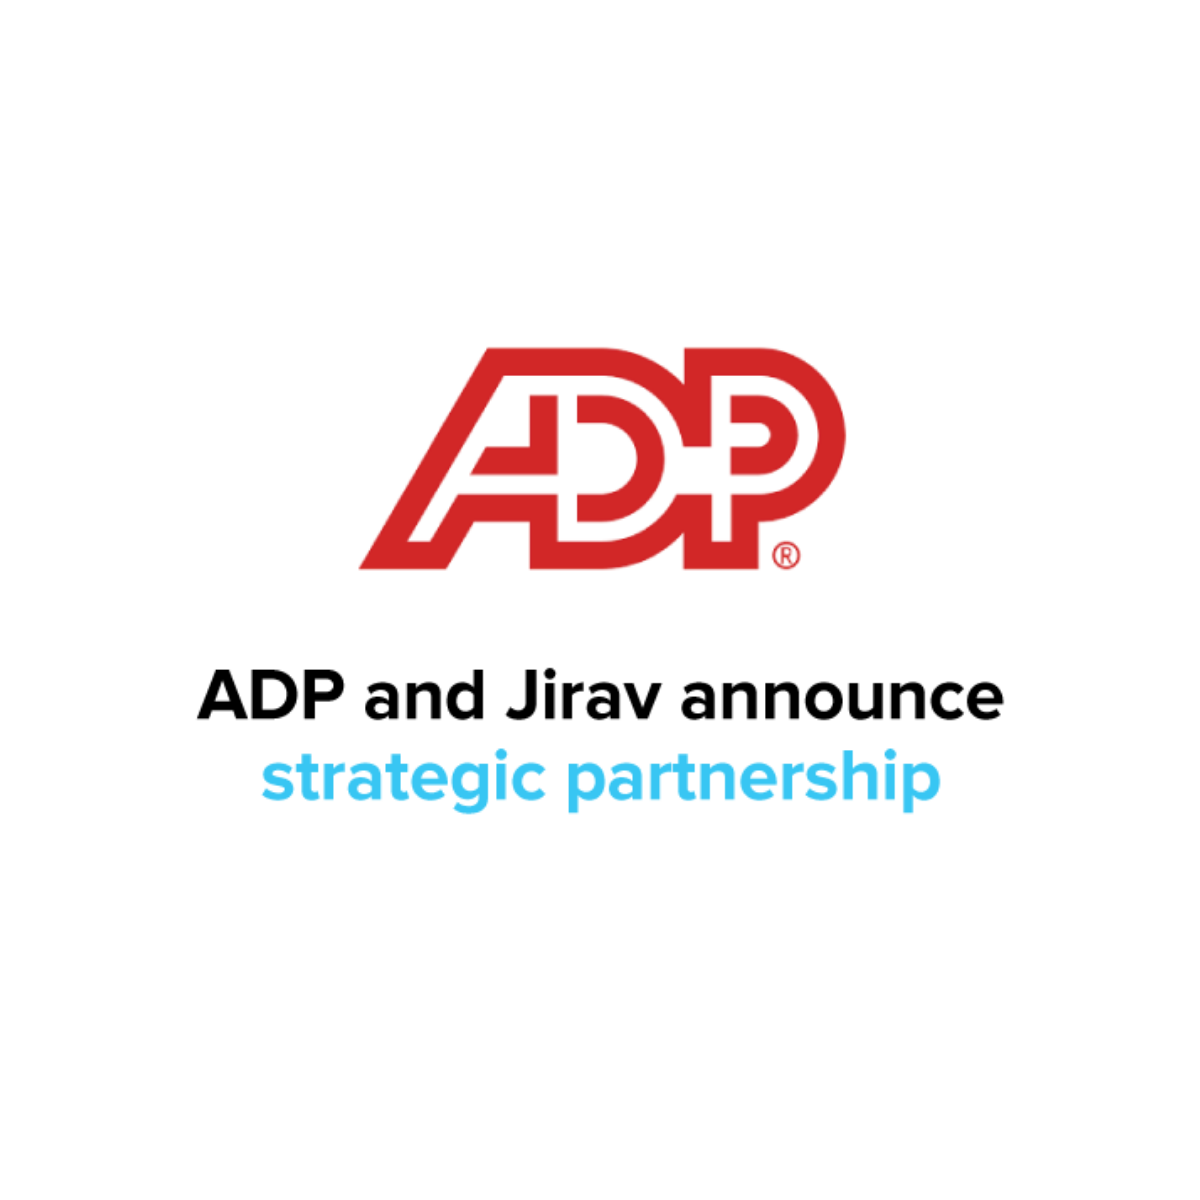 adp-jirav-partnership-announcement-graphic